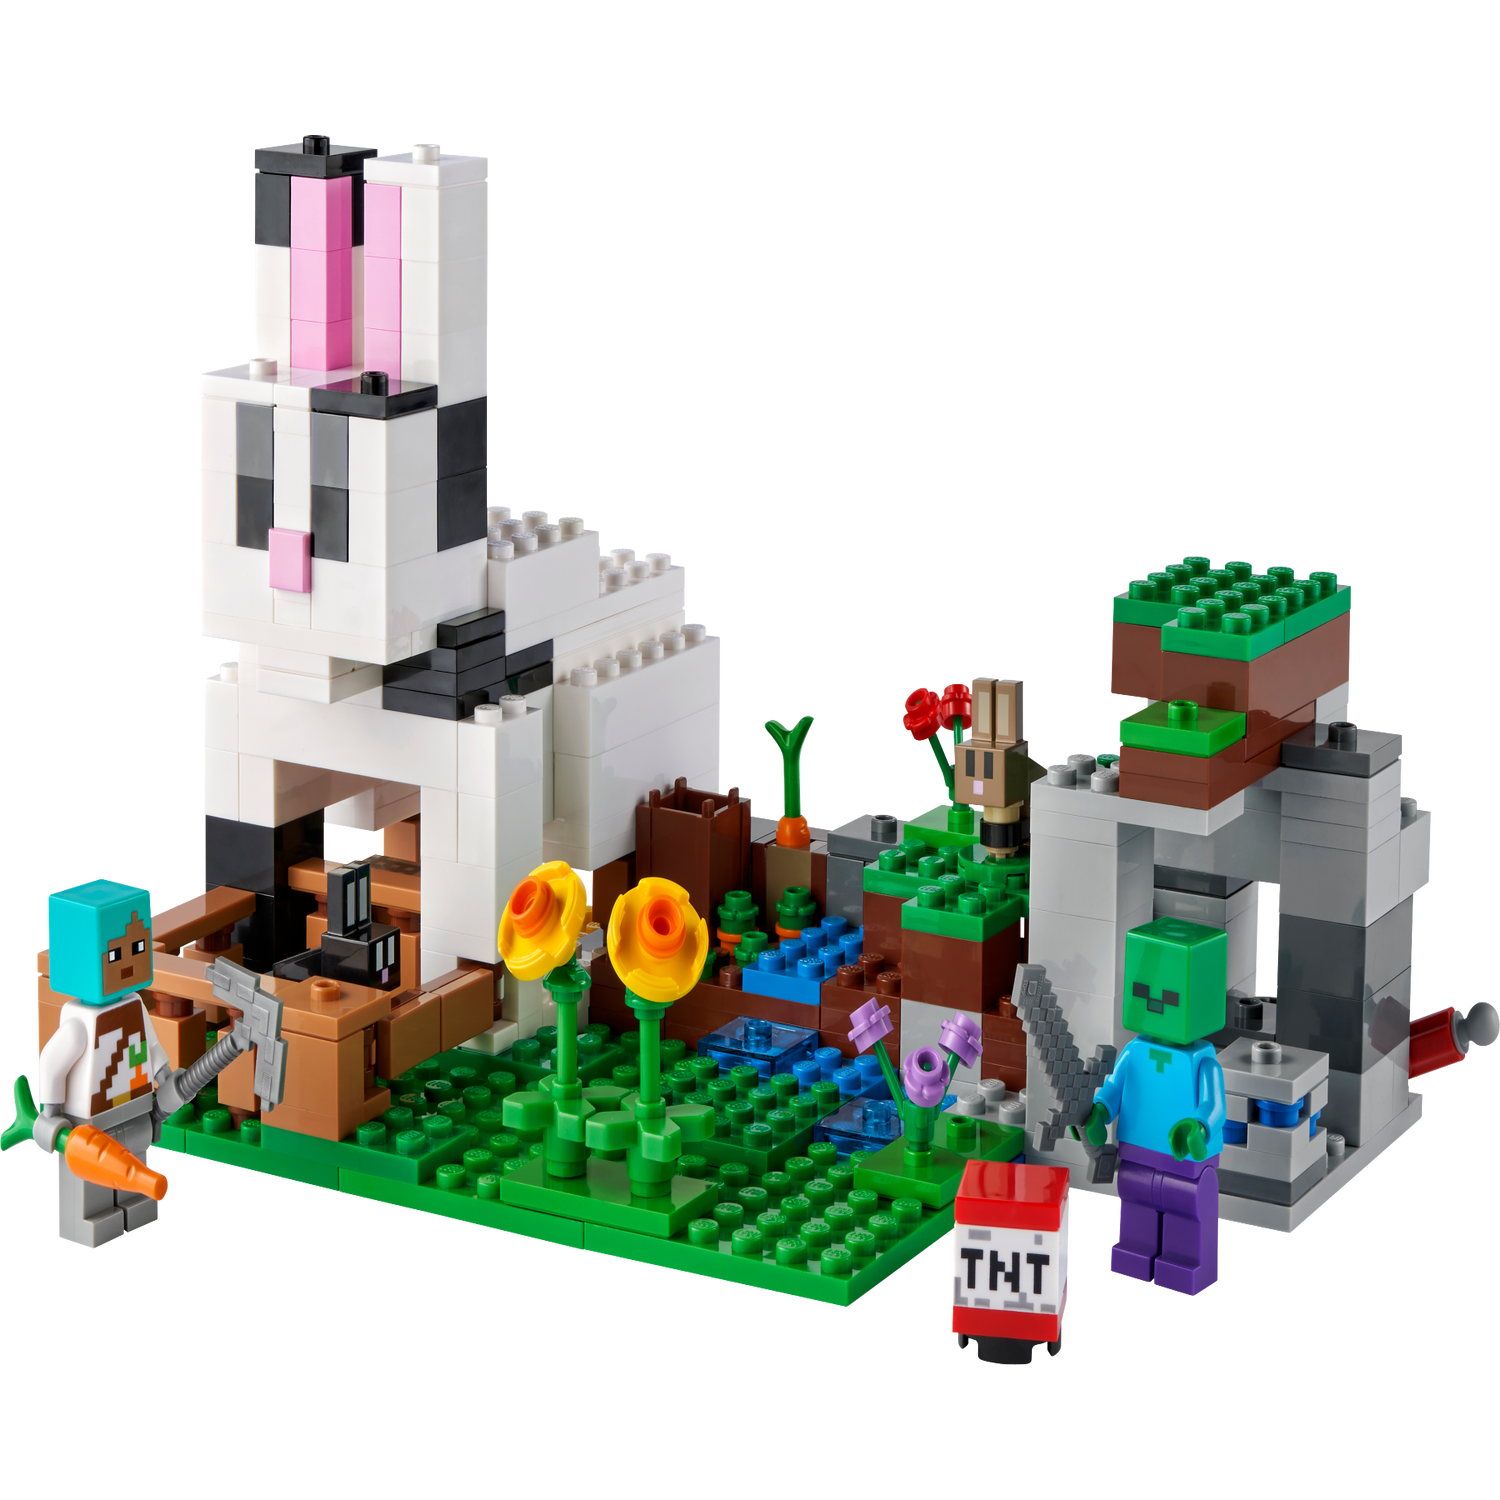 Lego Minecraft Rabbit Sitesunimiit